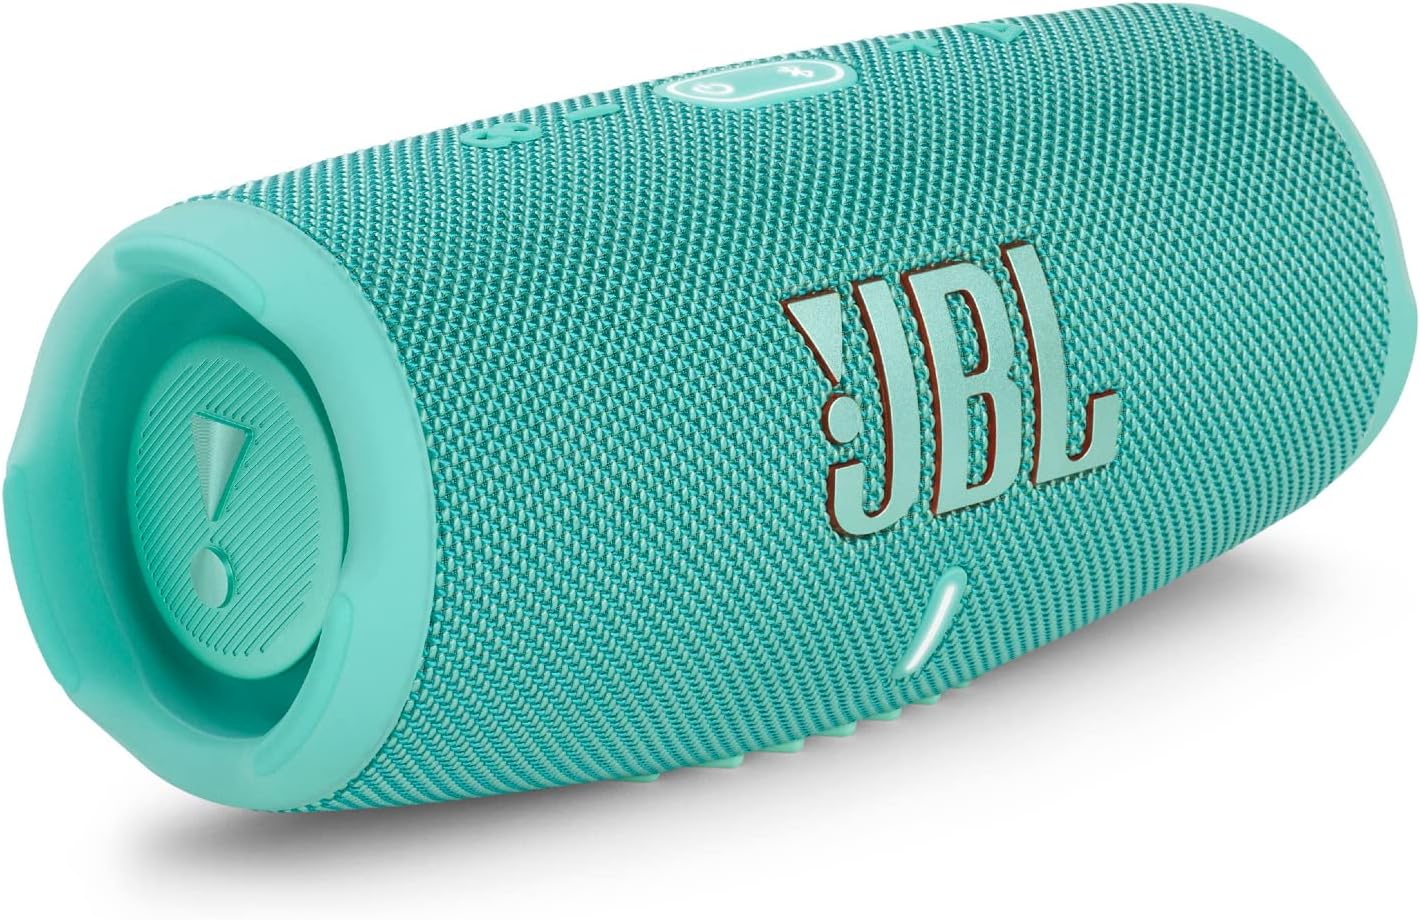 JBL Charge 5 Portable Speaker, Built-In Powerbank, Powerful JBL Pro Sound, Dual Bass Radiators, 20H of Battery, IP67 Waterproof and Dustproof, Wireless Streaming, Dual Connect - Black, JBLCHARGE5BLK